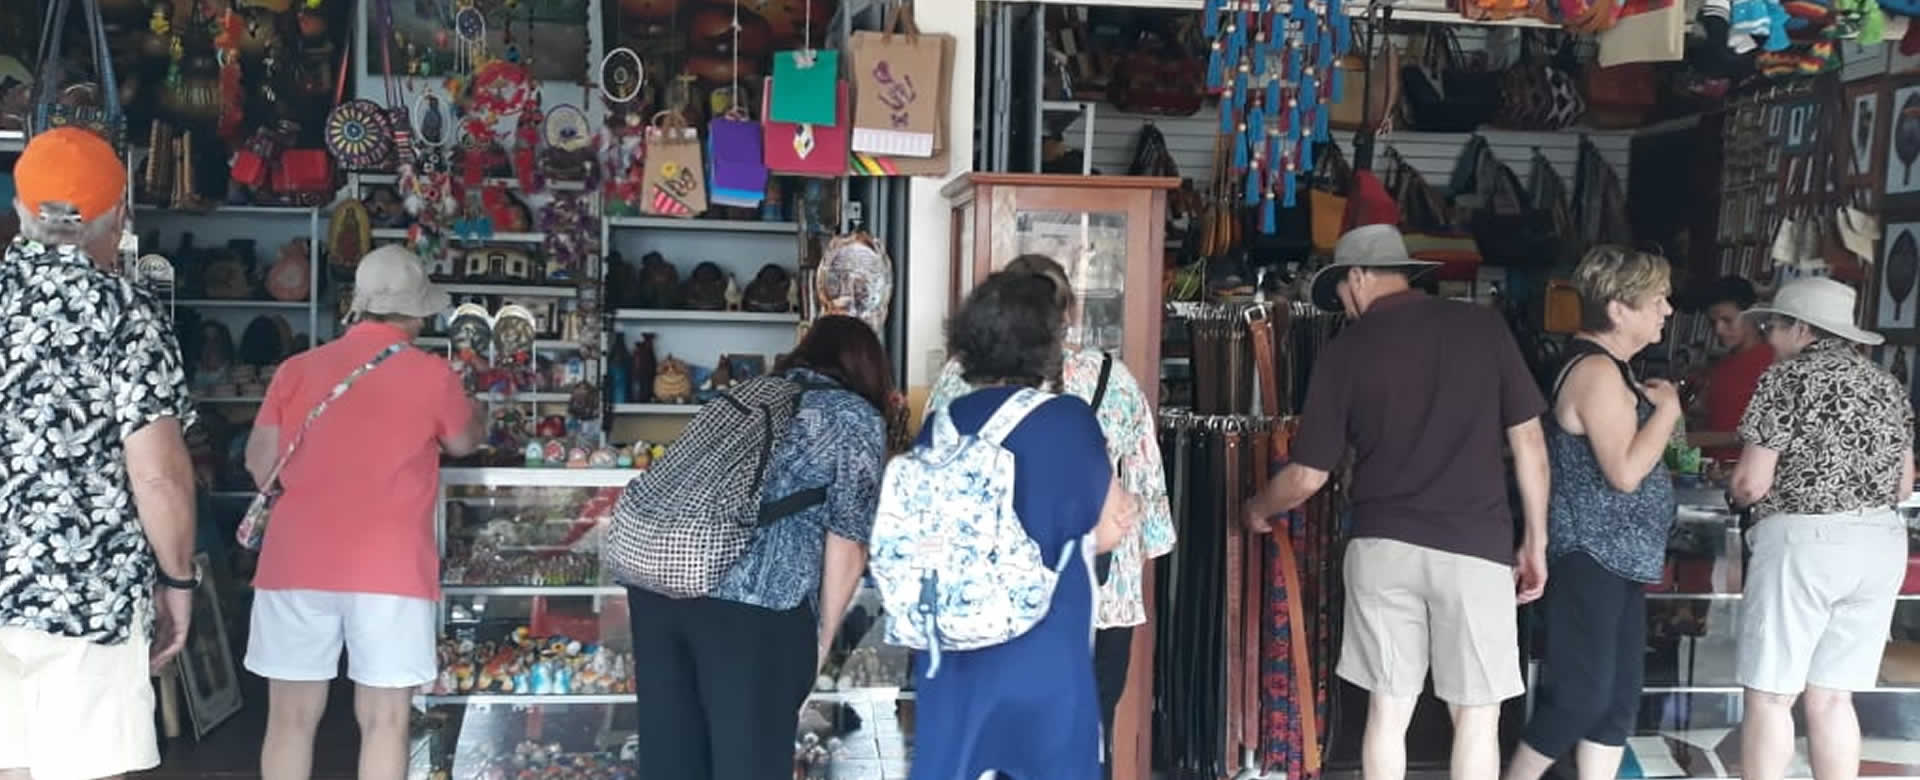 La Cuna del Folclore nicaragüense recibe a turistas del Crucero Coral Princess